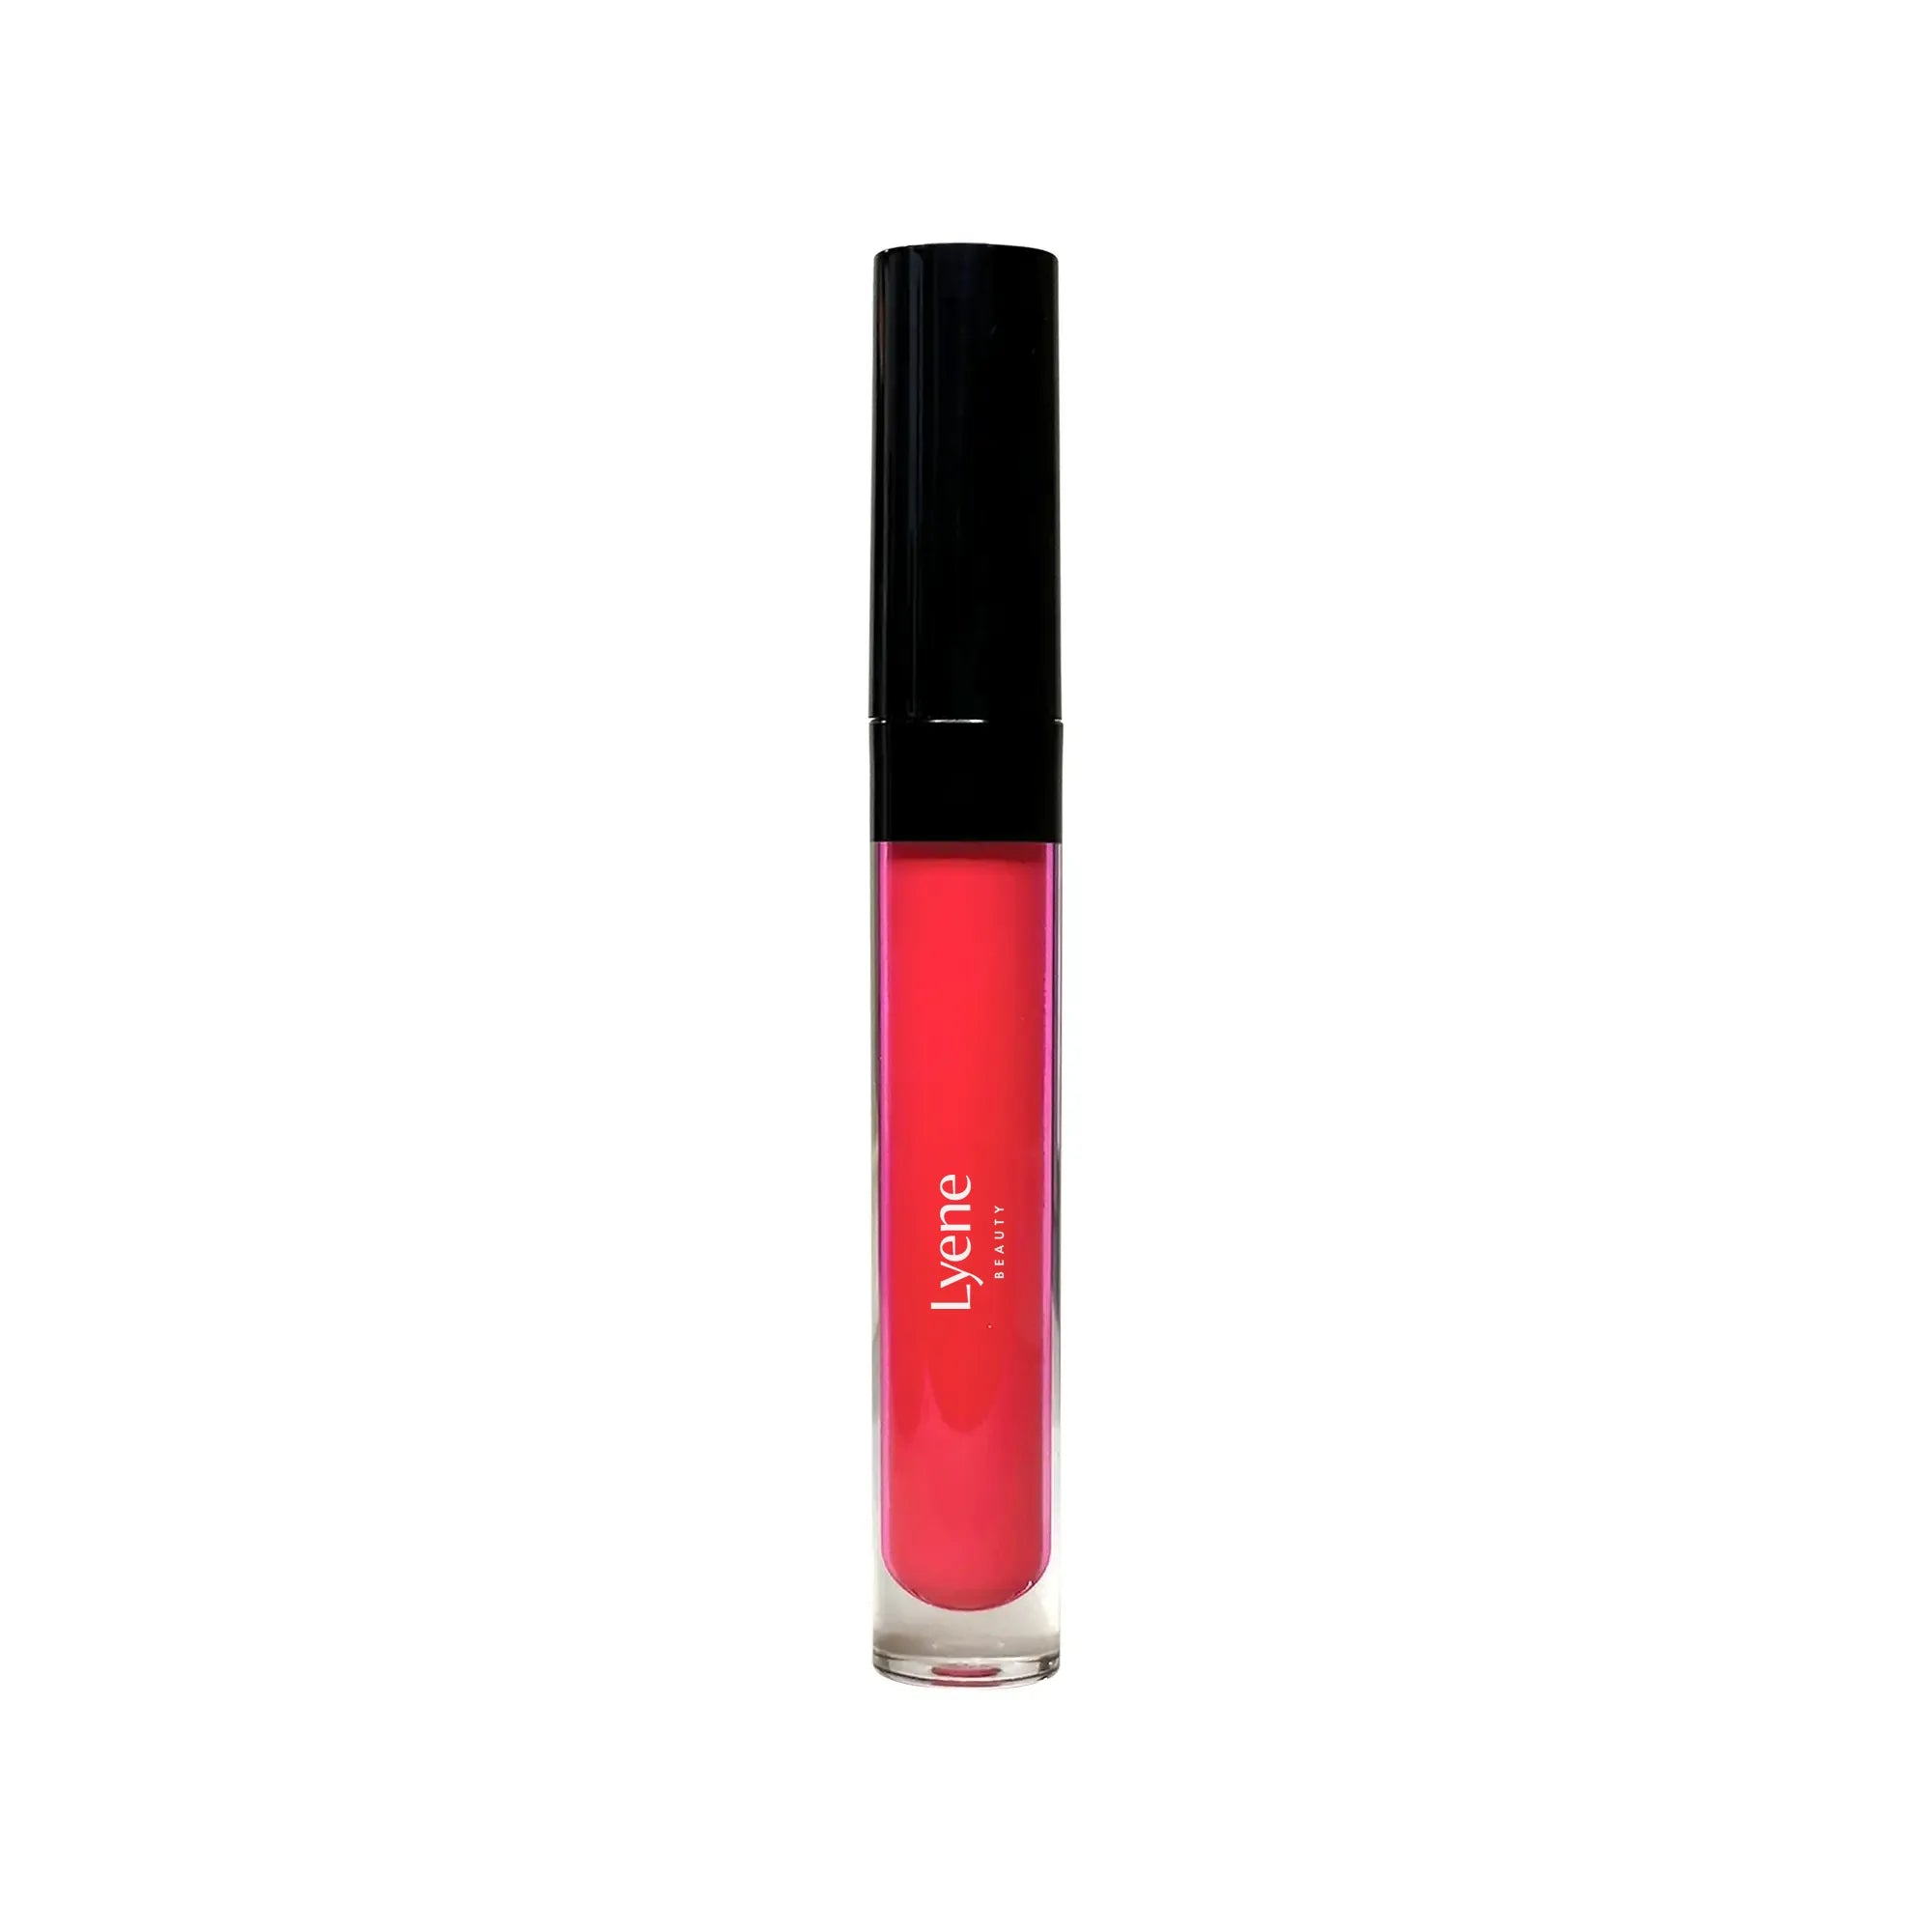 Liquid to Matte Lipstick - Coral Crush - Liquid to Matte Lipstick - Coral Crush